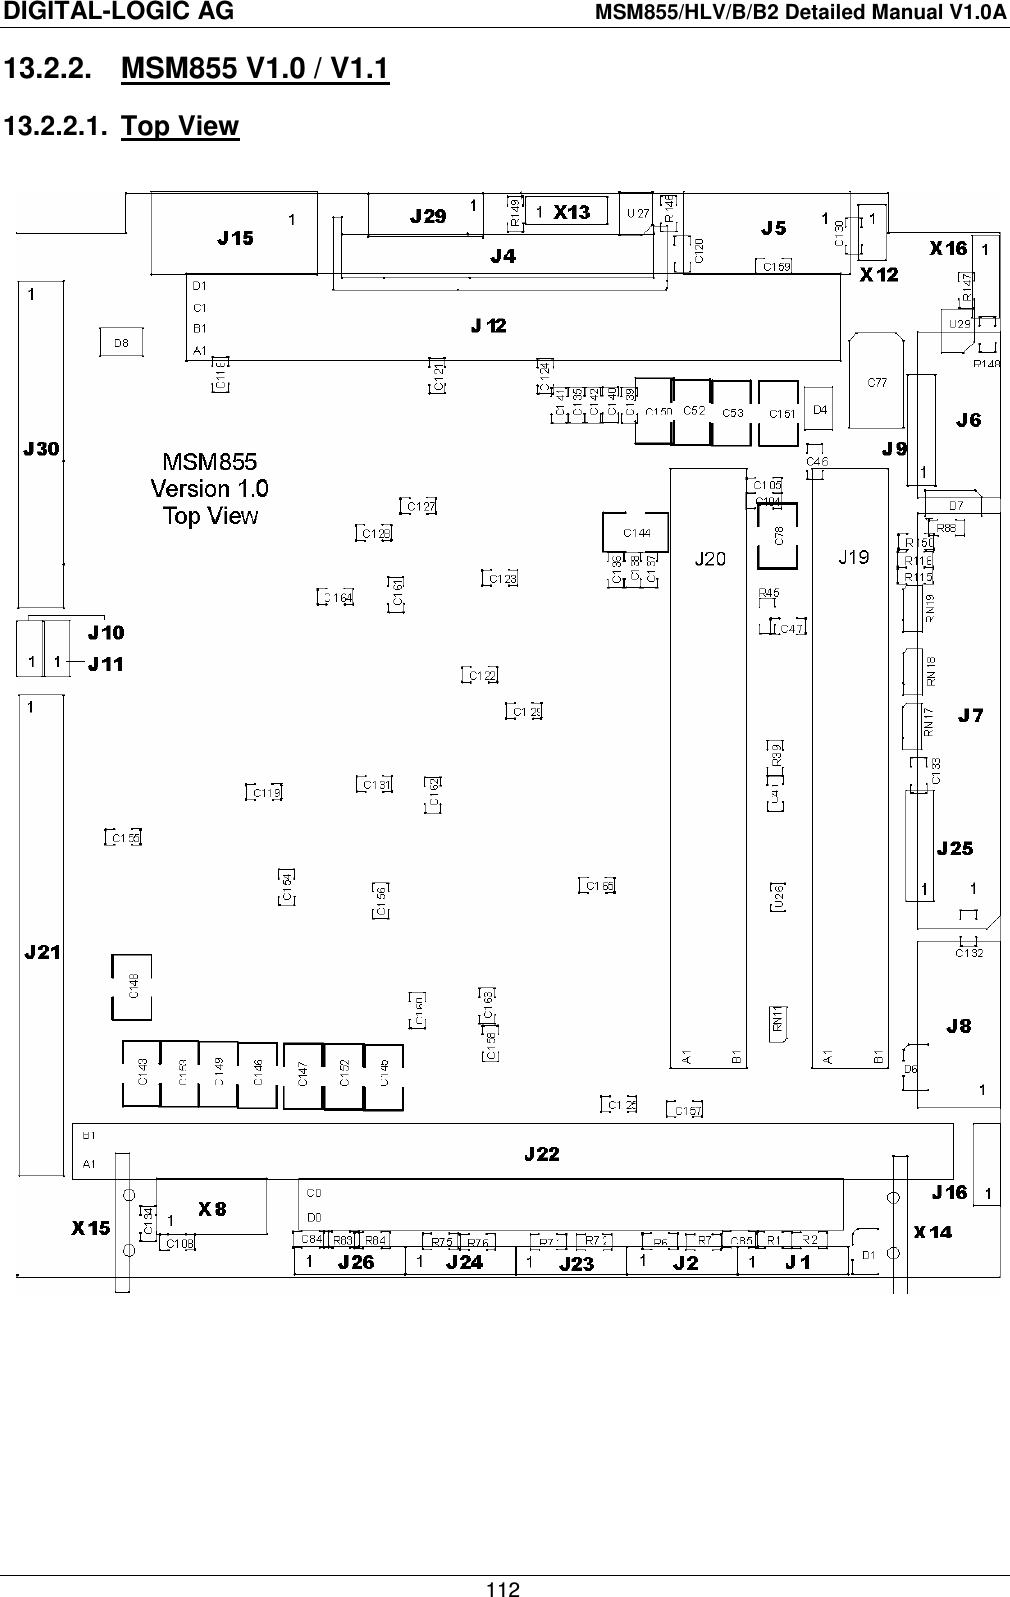 DIGITAL-LOGIC AG    MSM855/HLV/B/B2 Detailed Manual V1.0A    112 13.2.2.  MSM855 V1.0 / V1.1 13.2.2.1.  Top View   